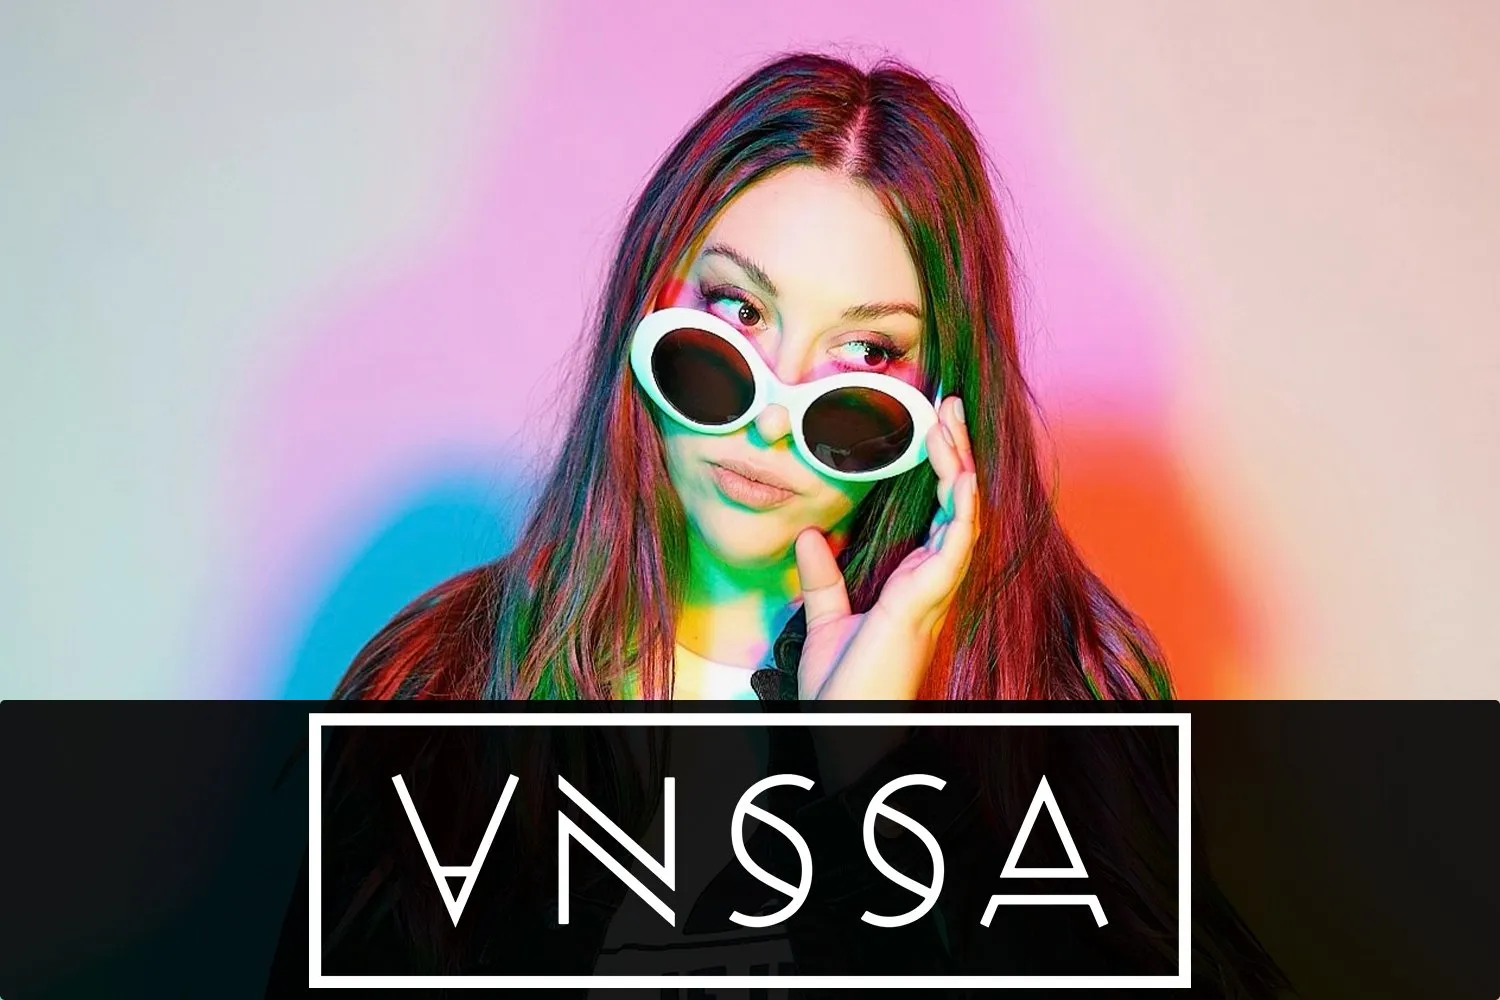 VNSSA artist poster